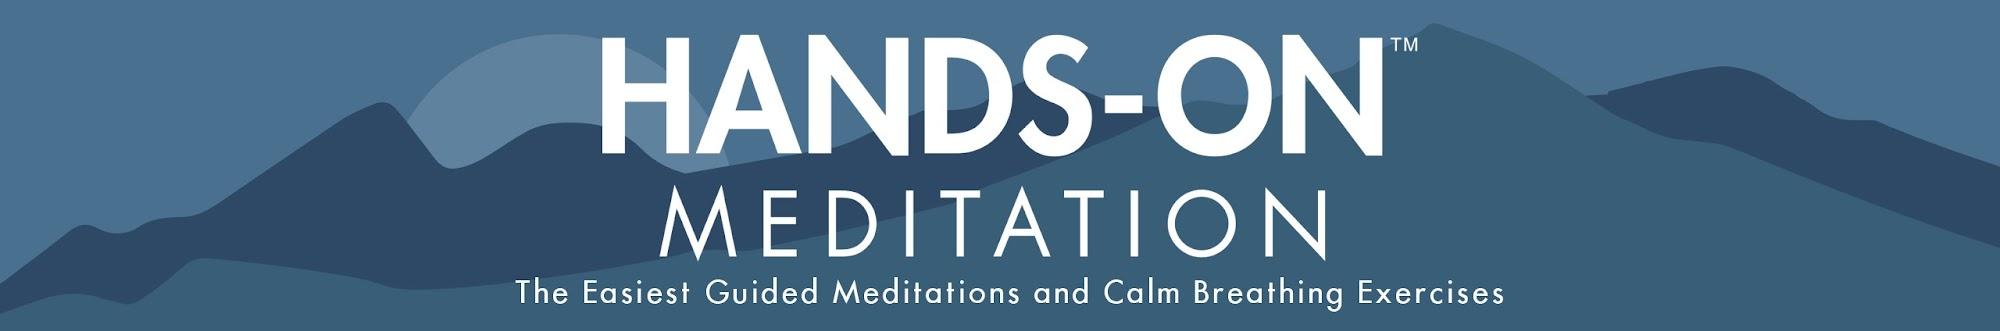 Hands-On Meditation